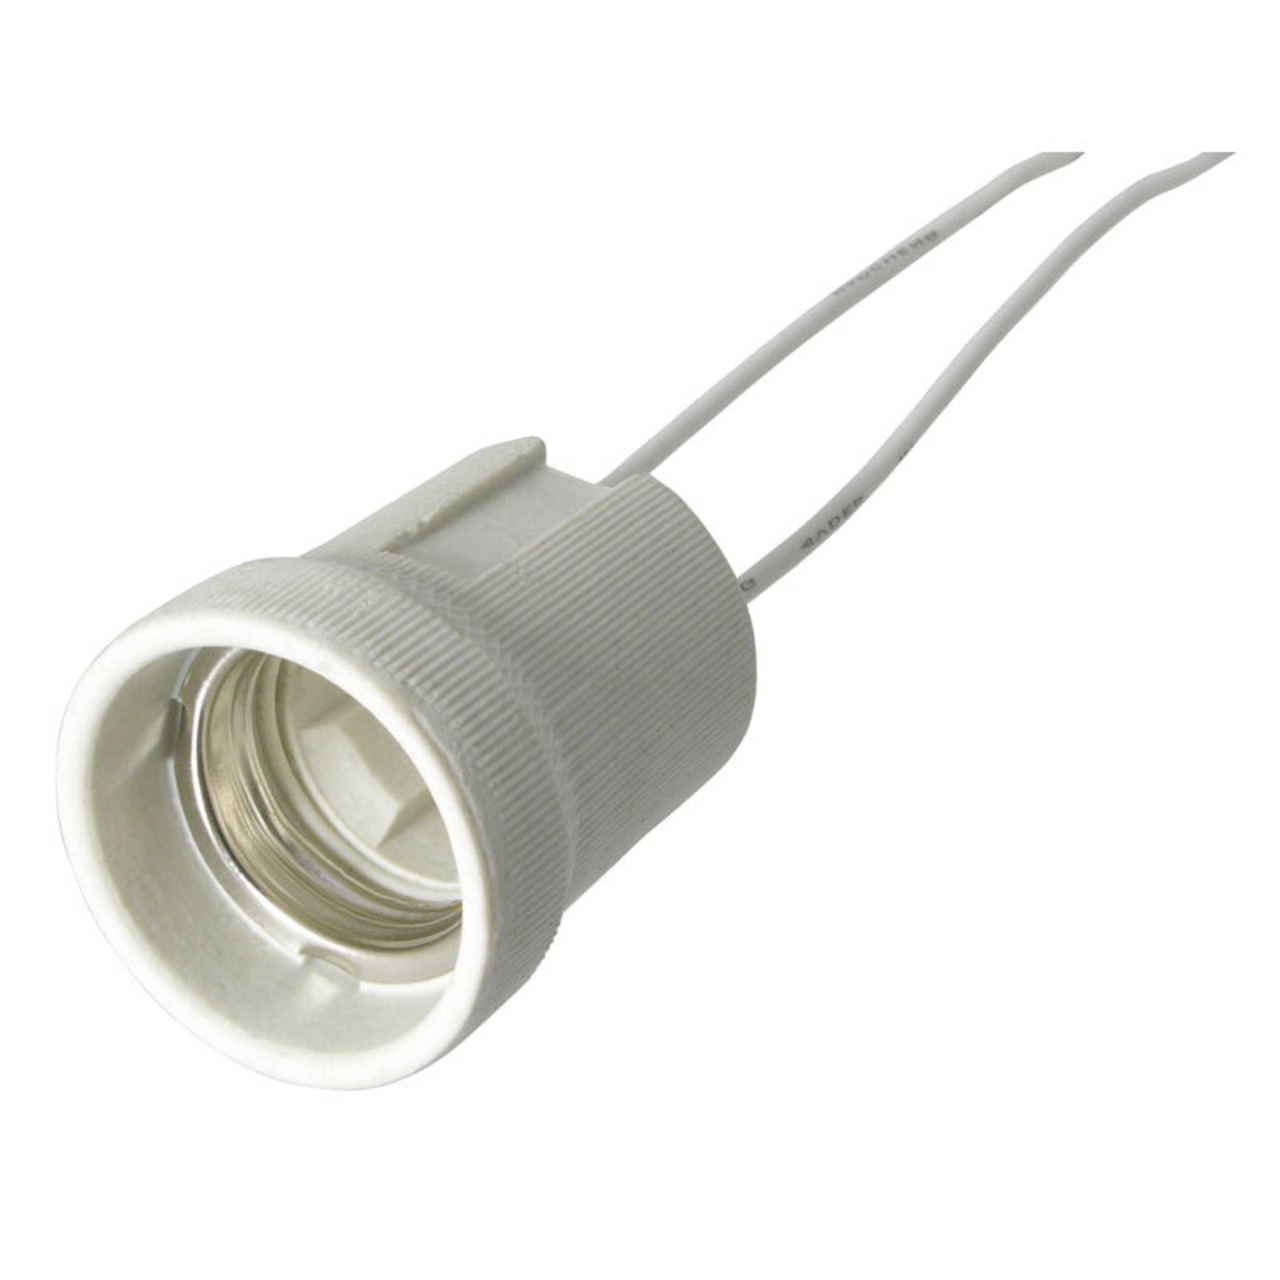 E27-Fassung- 230V- 15cm Kabel unter Beleuchtung